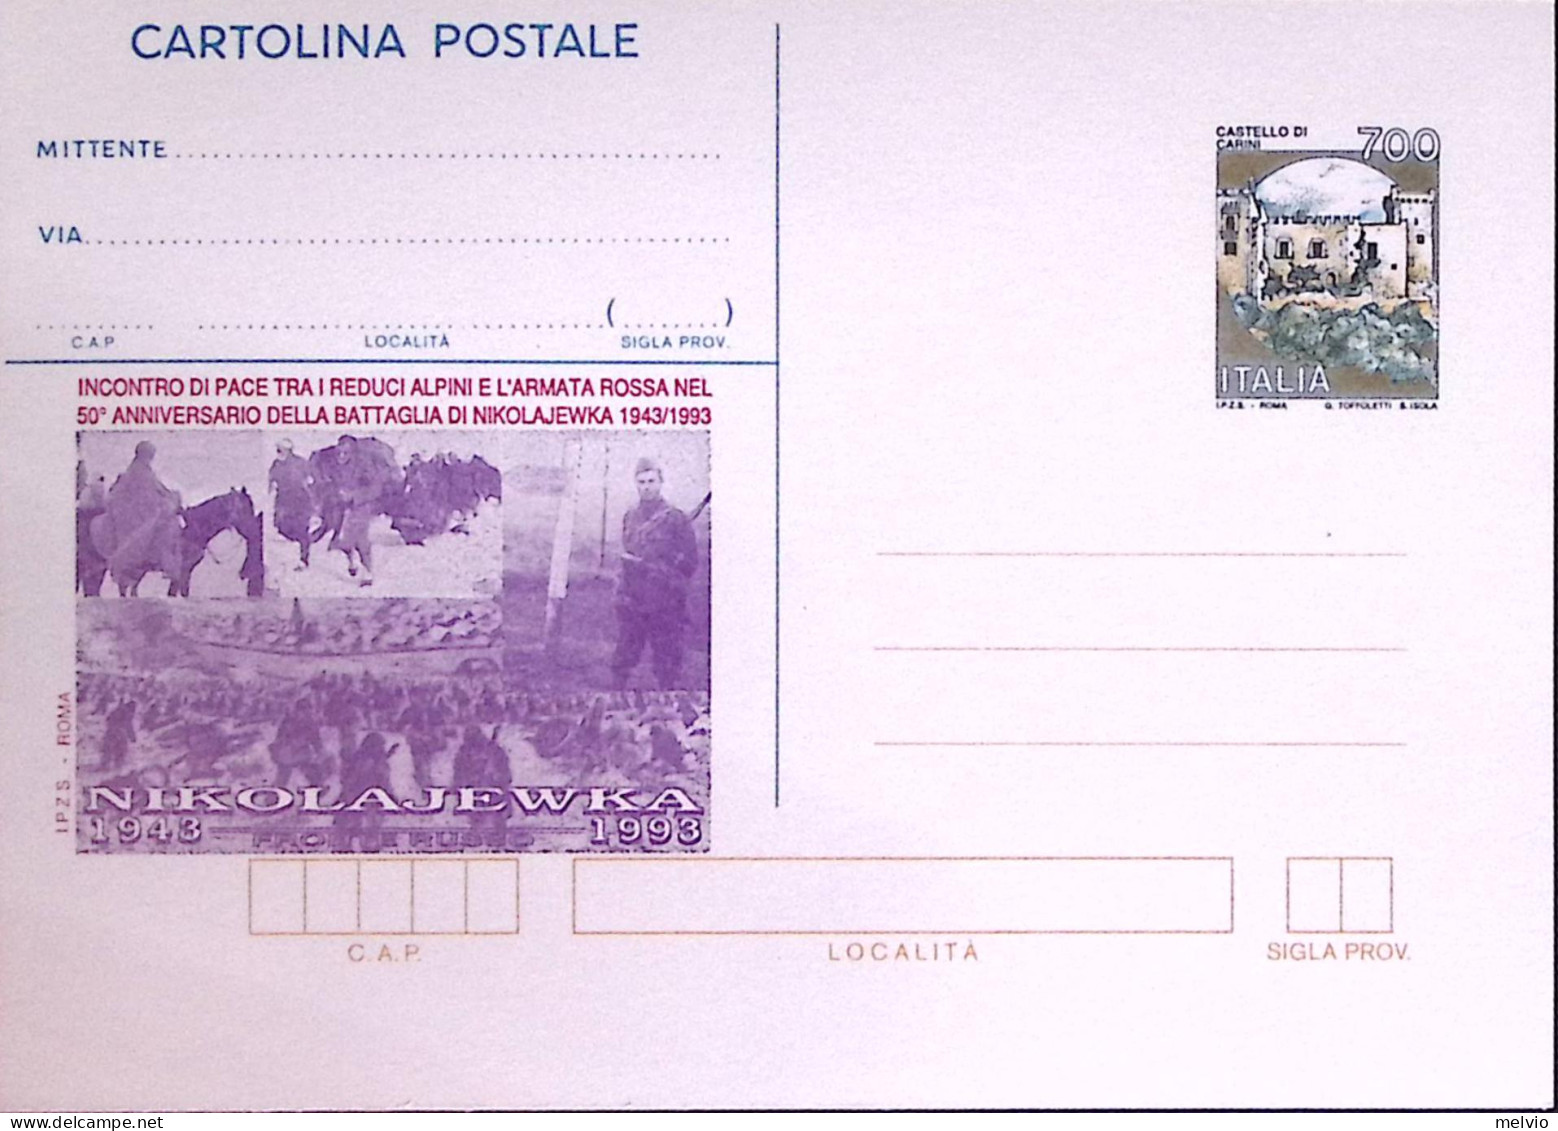 1993-Cartolina Postale Lire 700 Sopr. IPZS 50 Anniversario Battaglia Di Nicolaje - Stamped Stationery